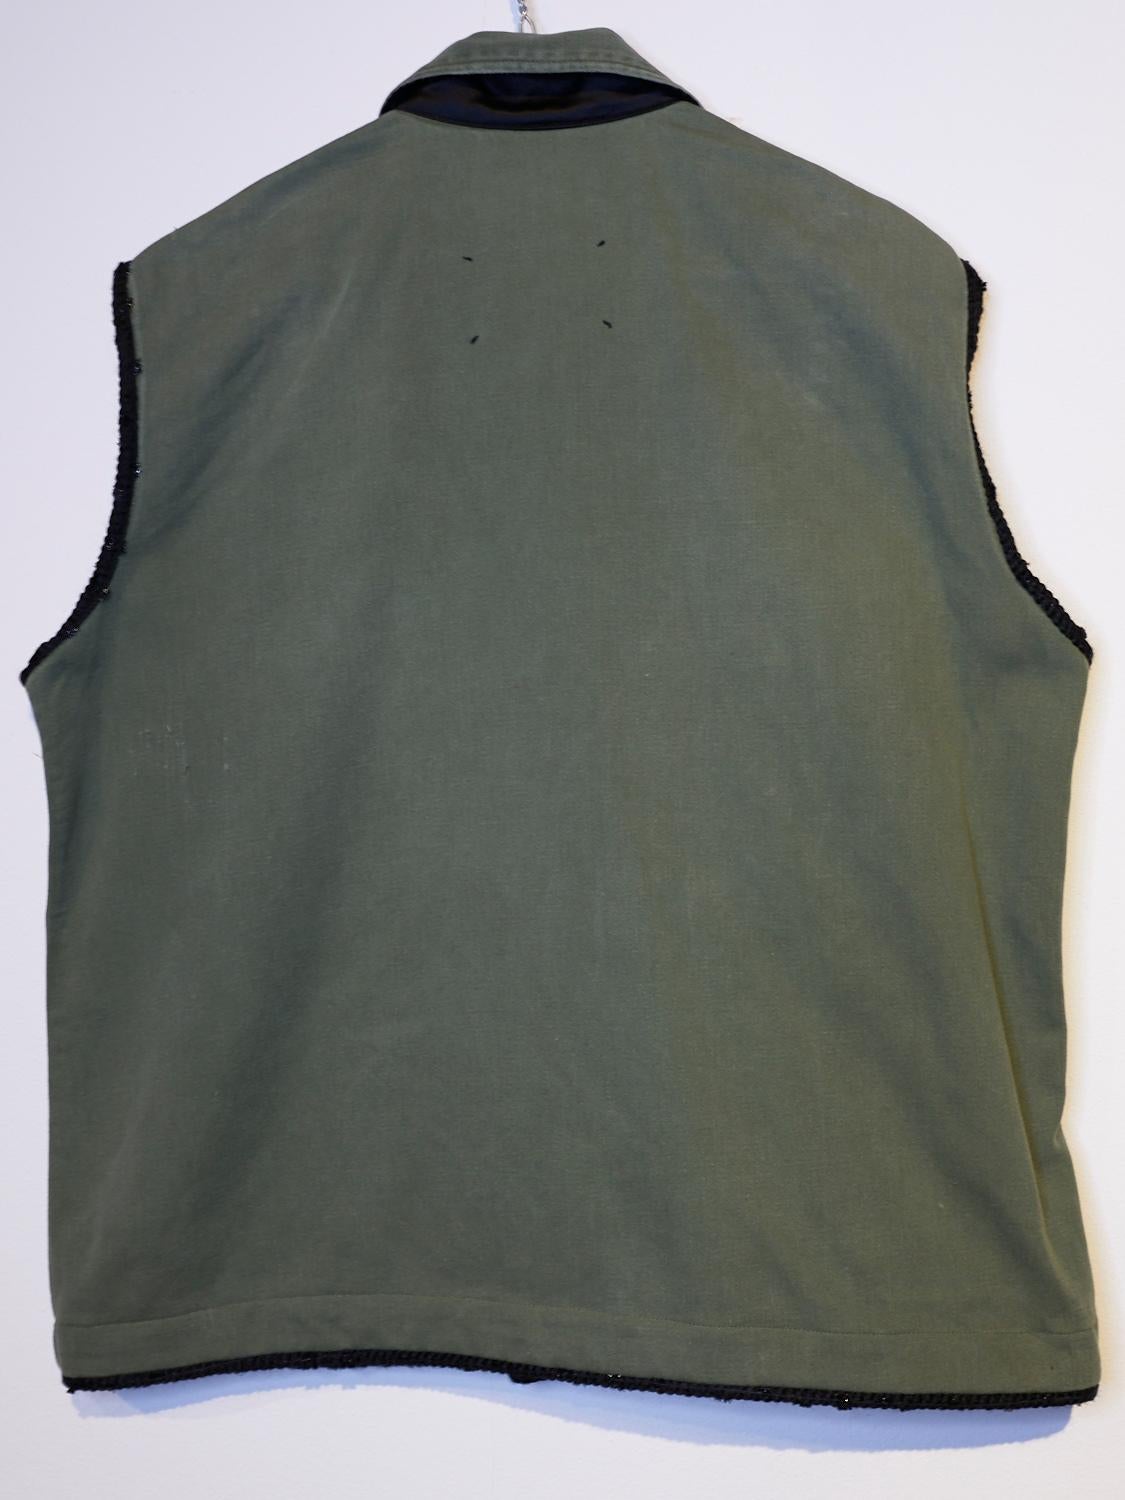 Black Embellished Sleeveless Jacket Vest Military Green Tweed Pockets J Dauphin